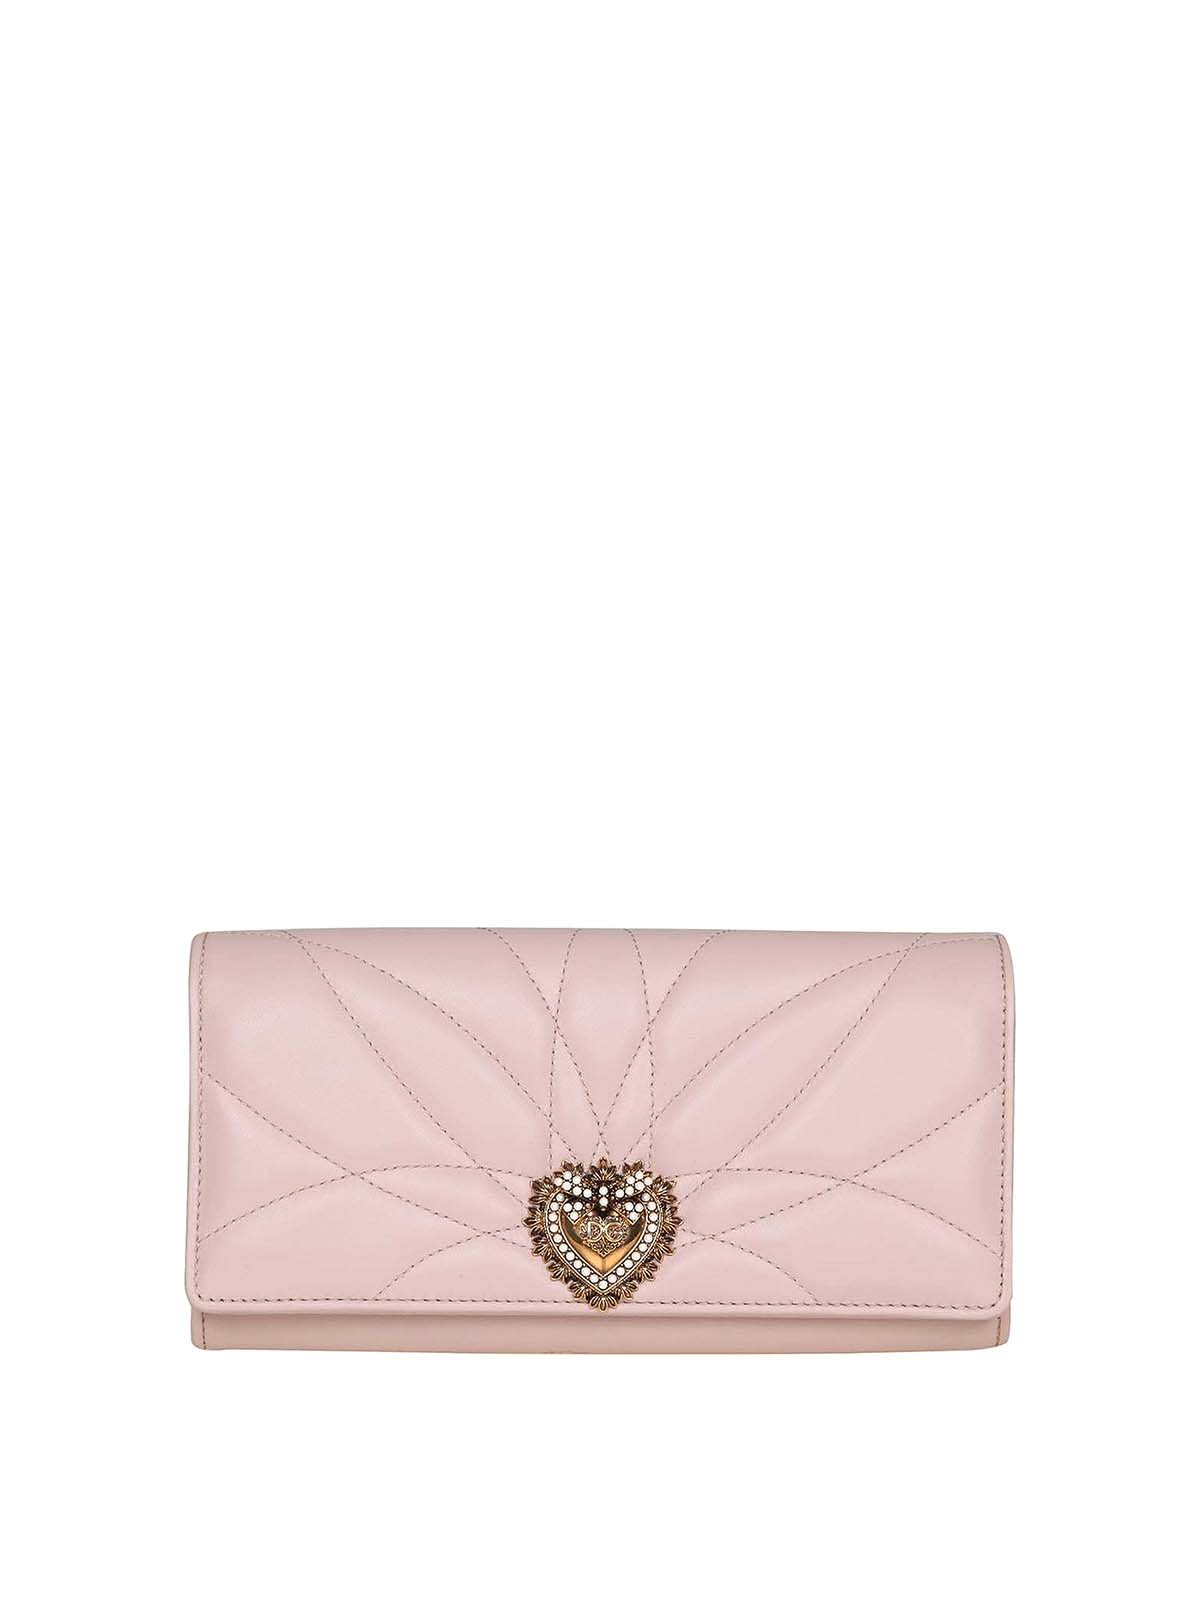 Dolce & Gabbana Devotion Light Pink Leather Wallet